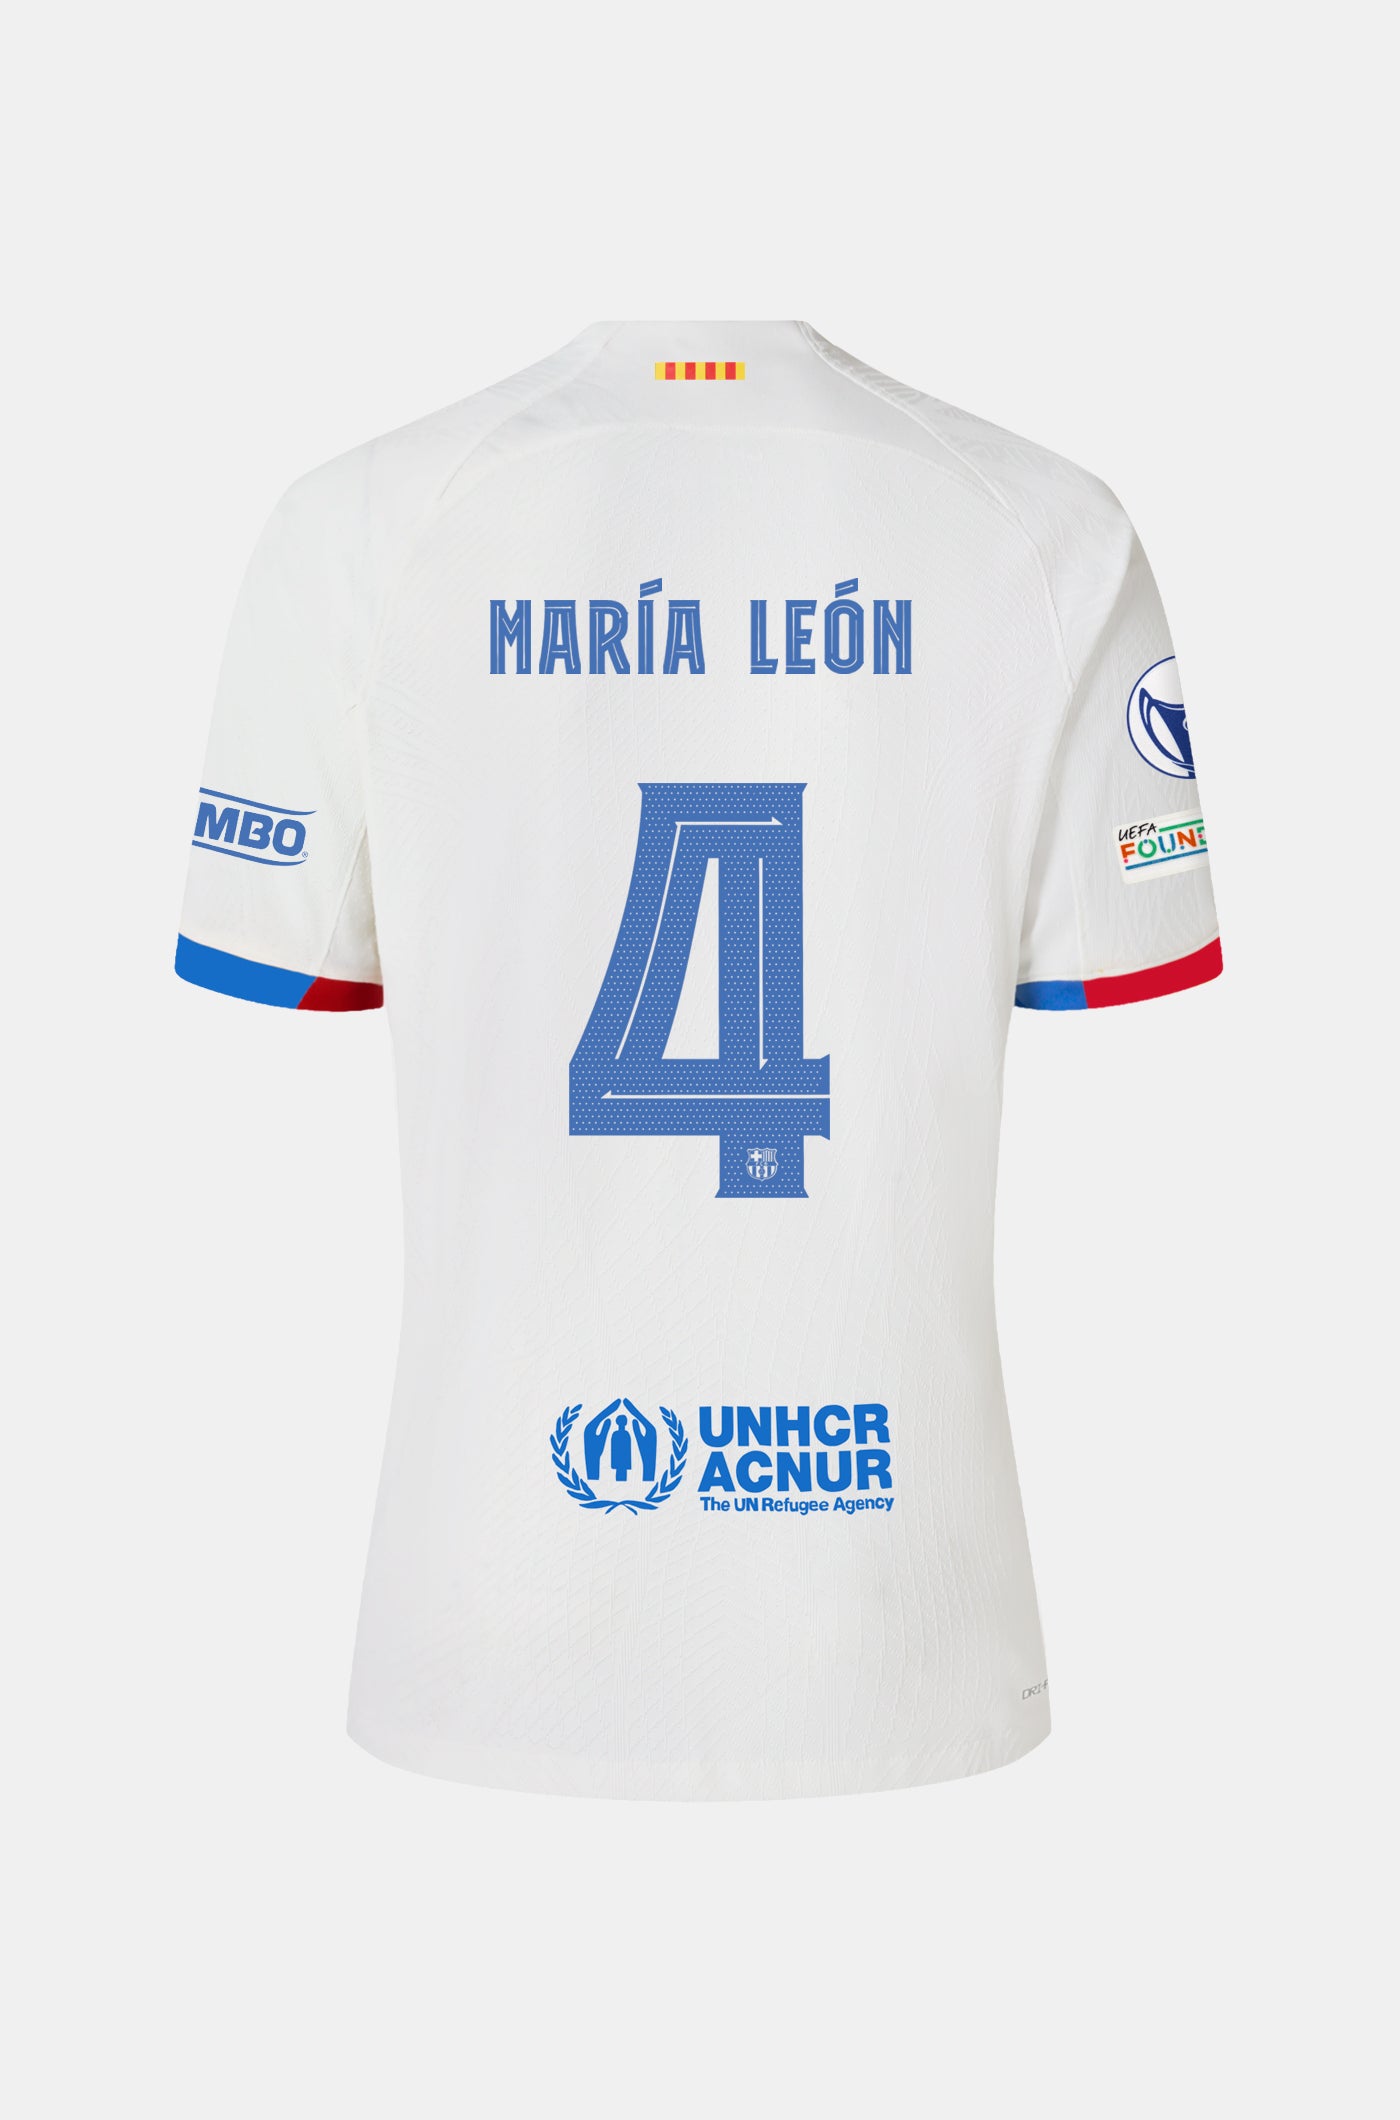 UWCL FC Barcelona away shirt 23/24 Player's Edition - MARÍA LEÓN